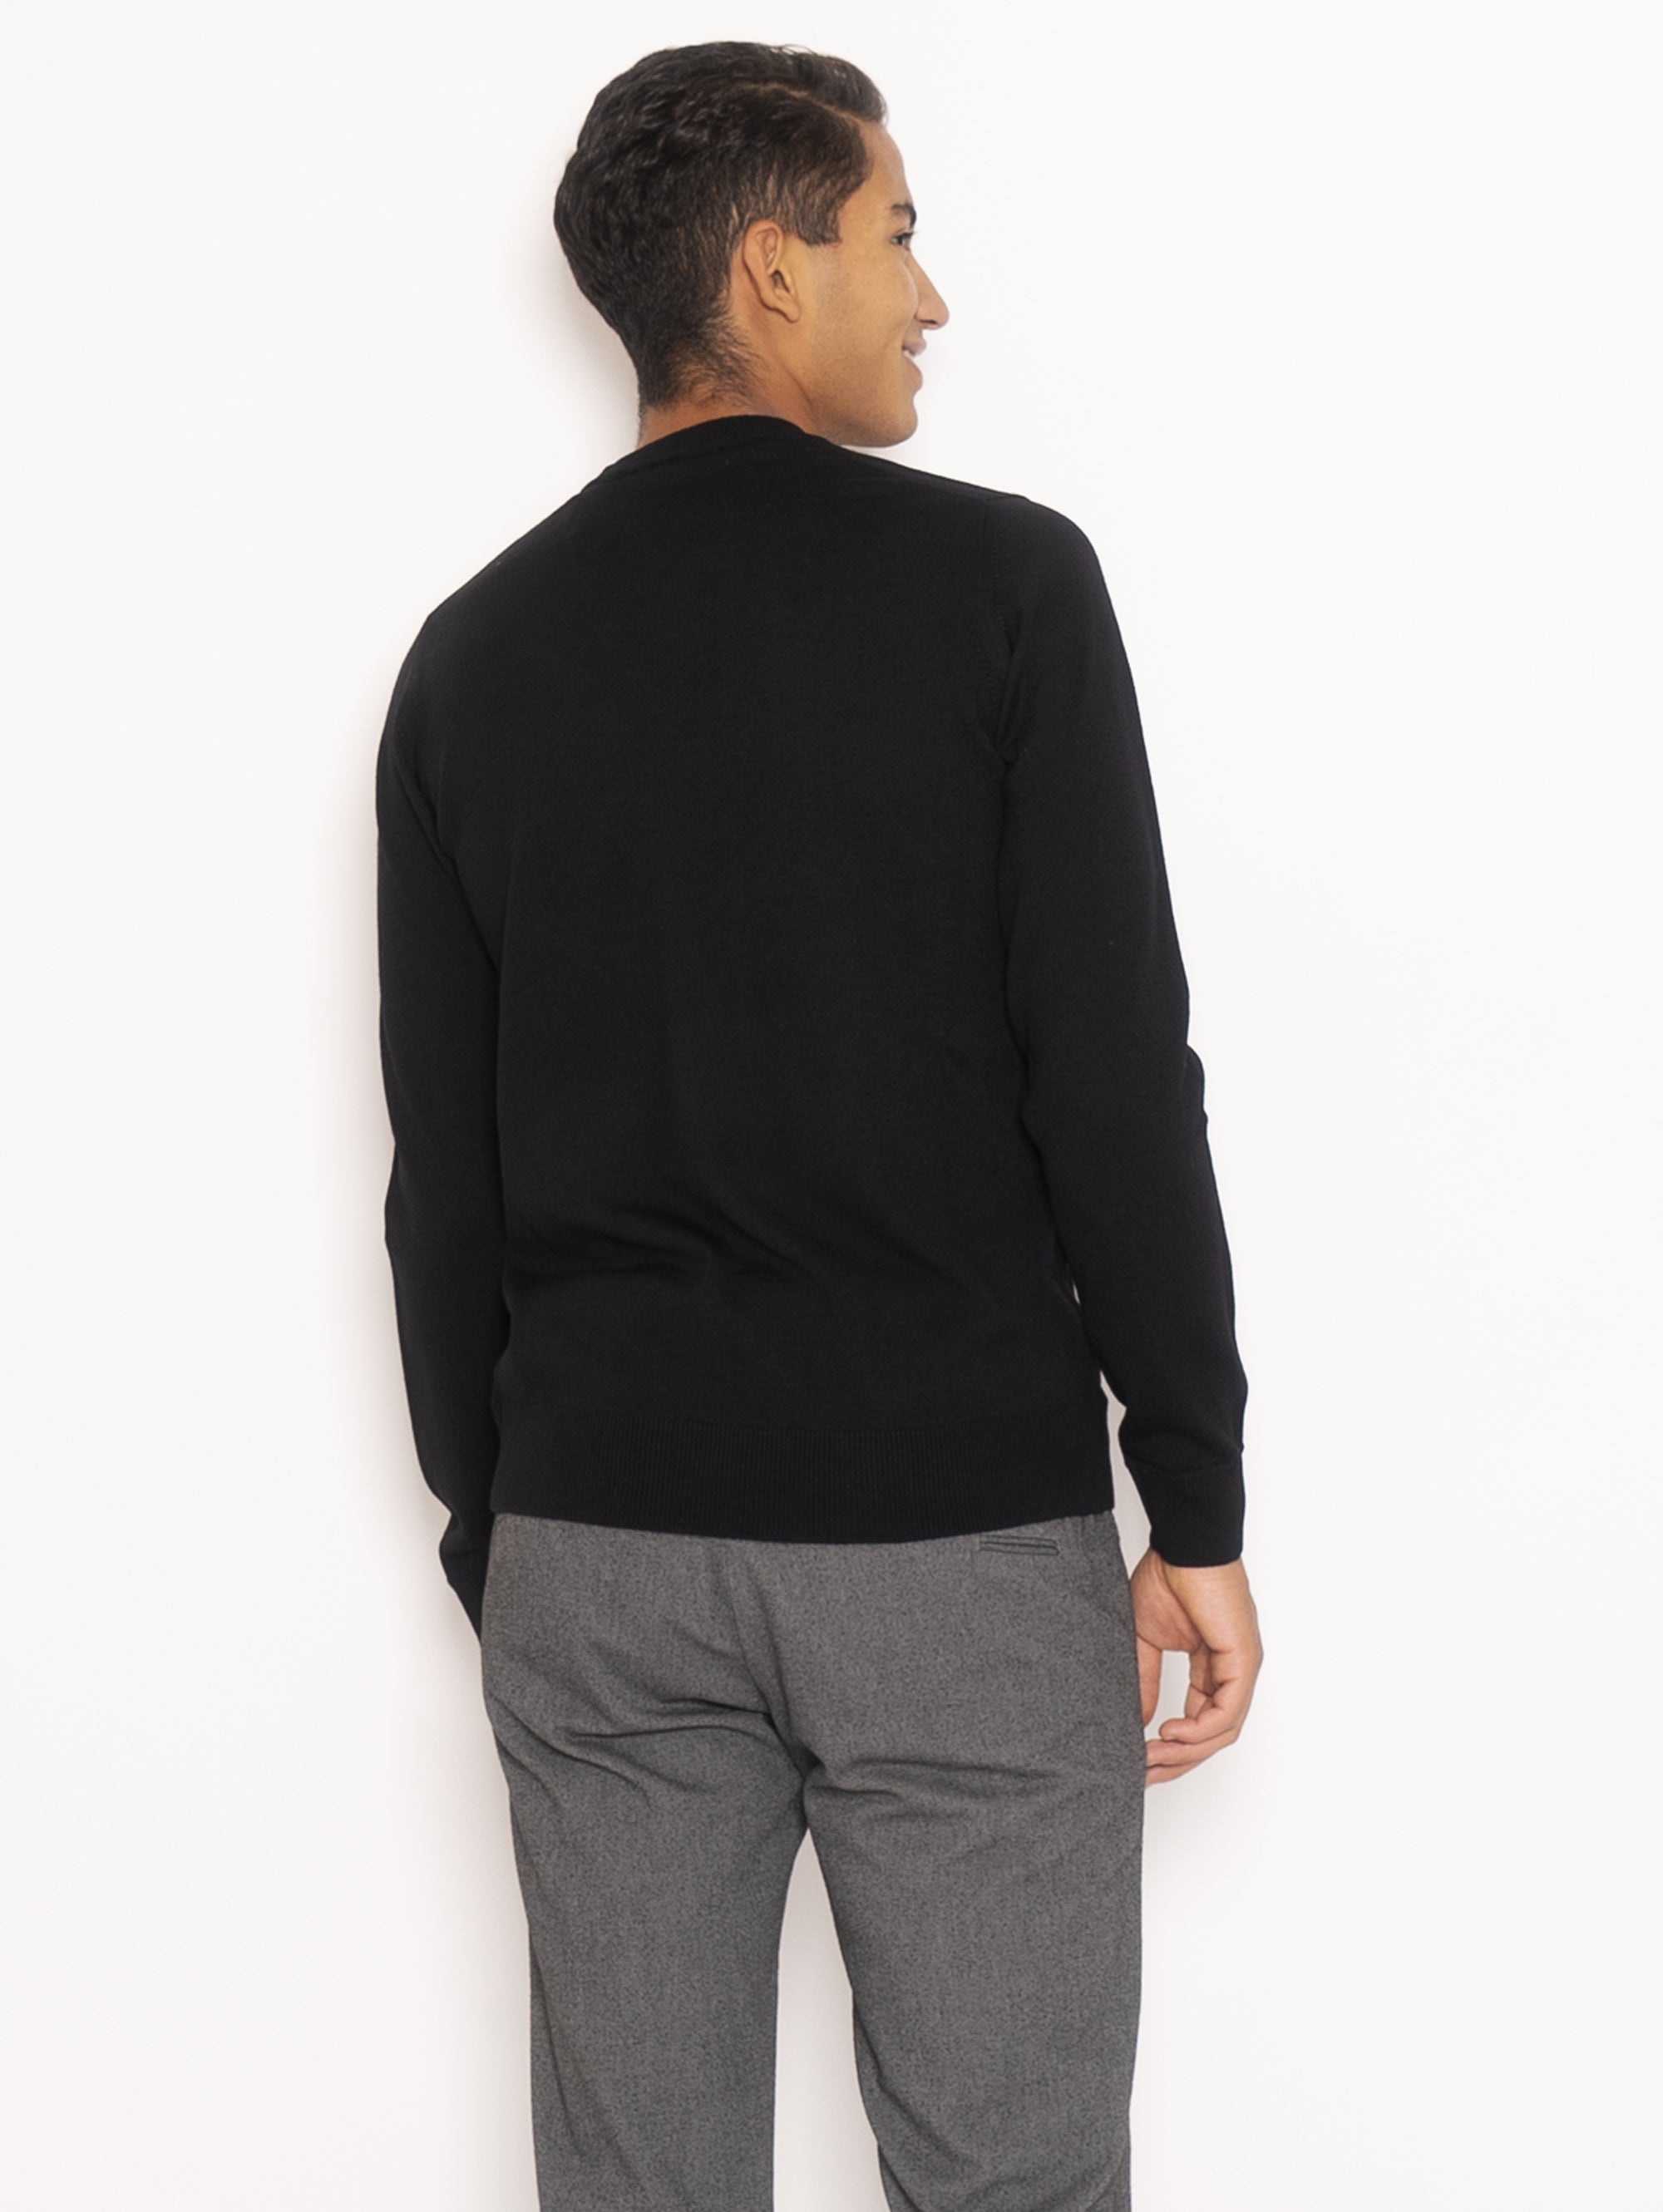 50BC4 - Black wool crew neck sweater